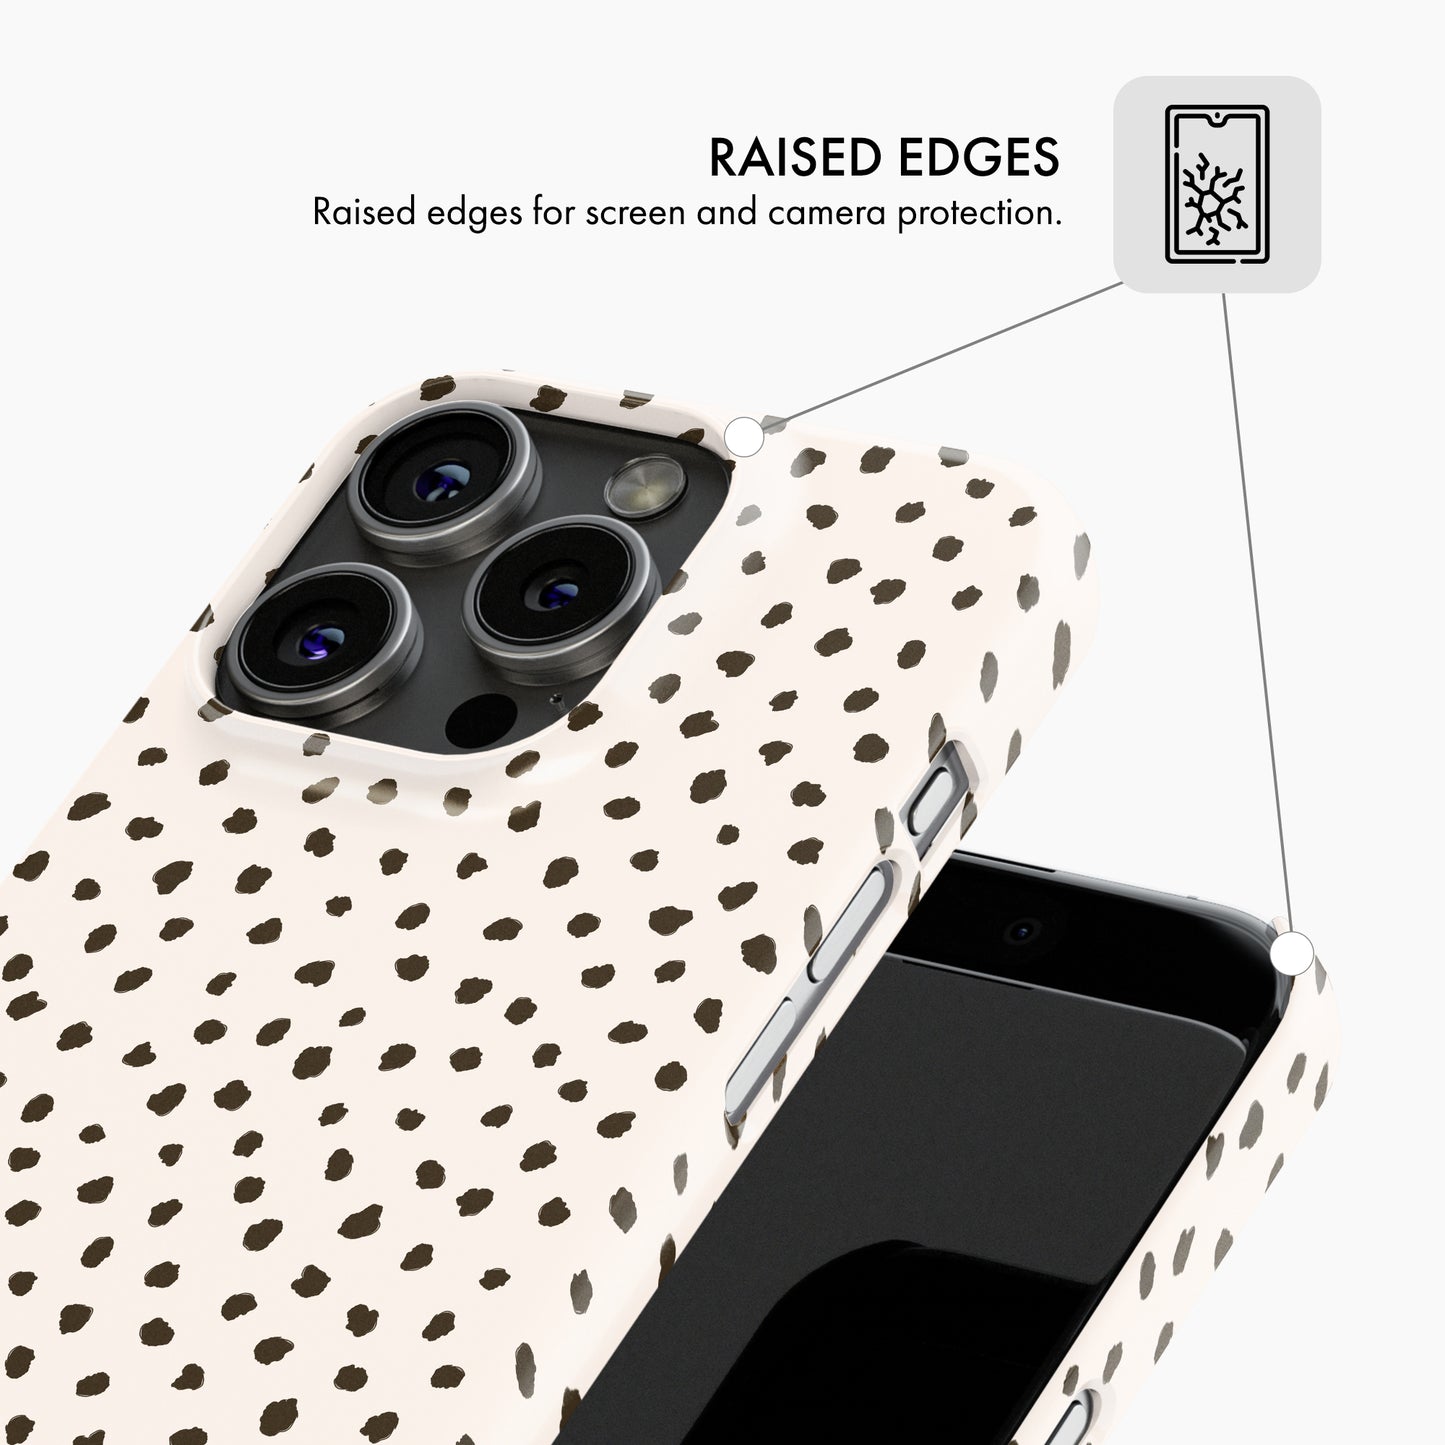 Boho Spots - Snap Phone Case